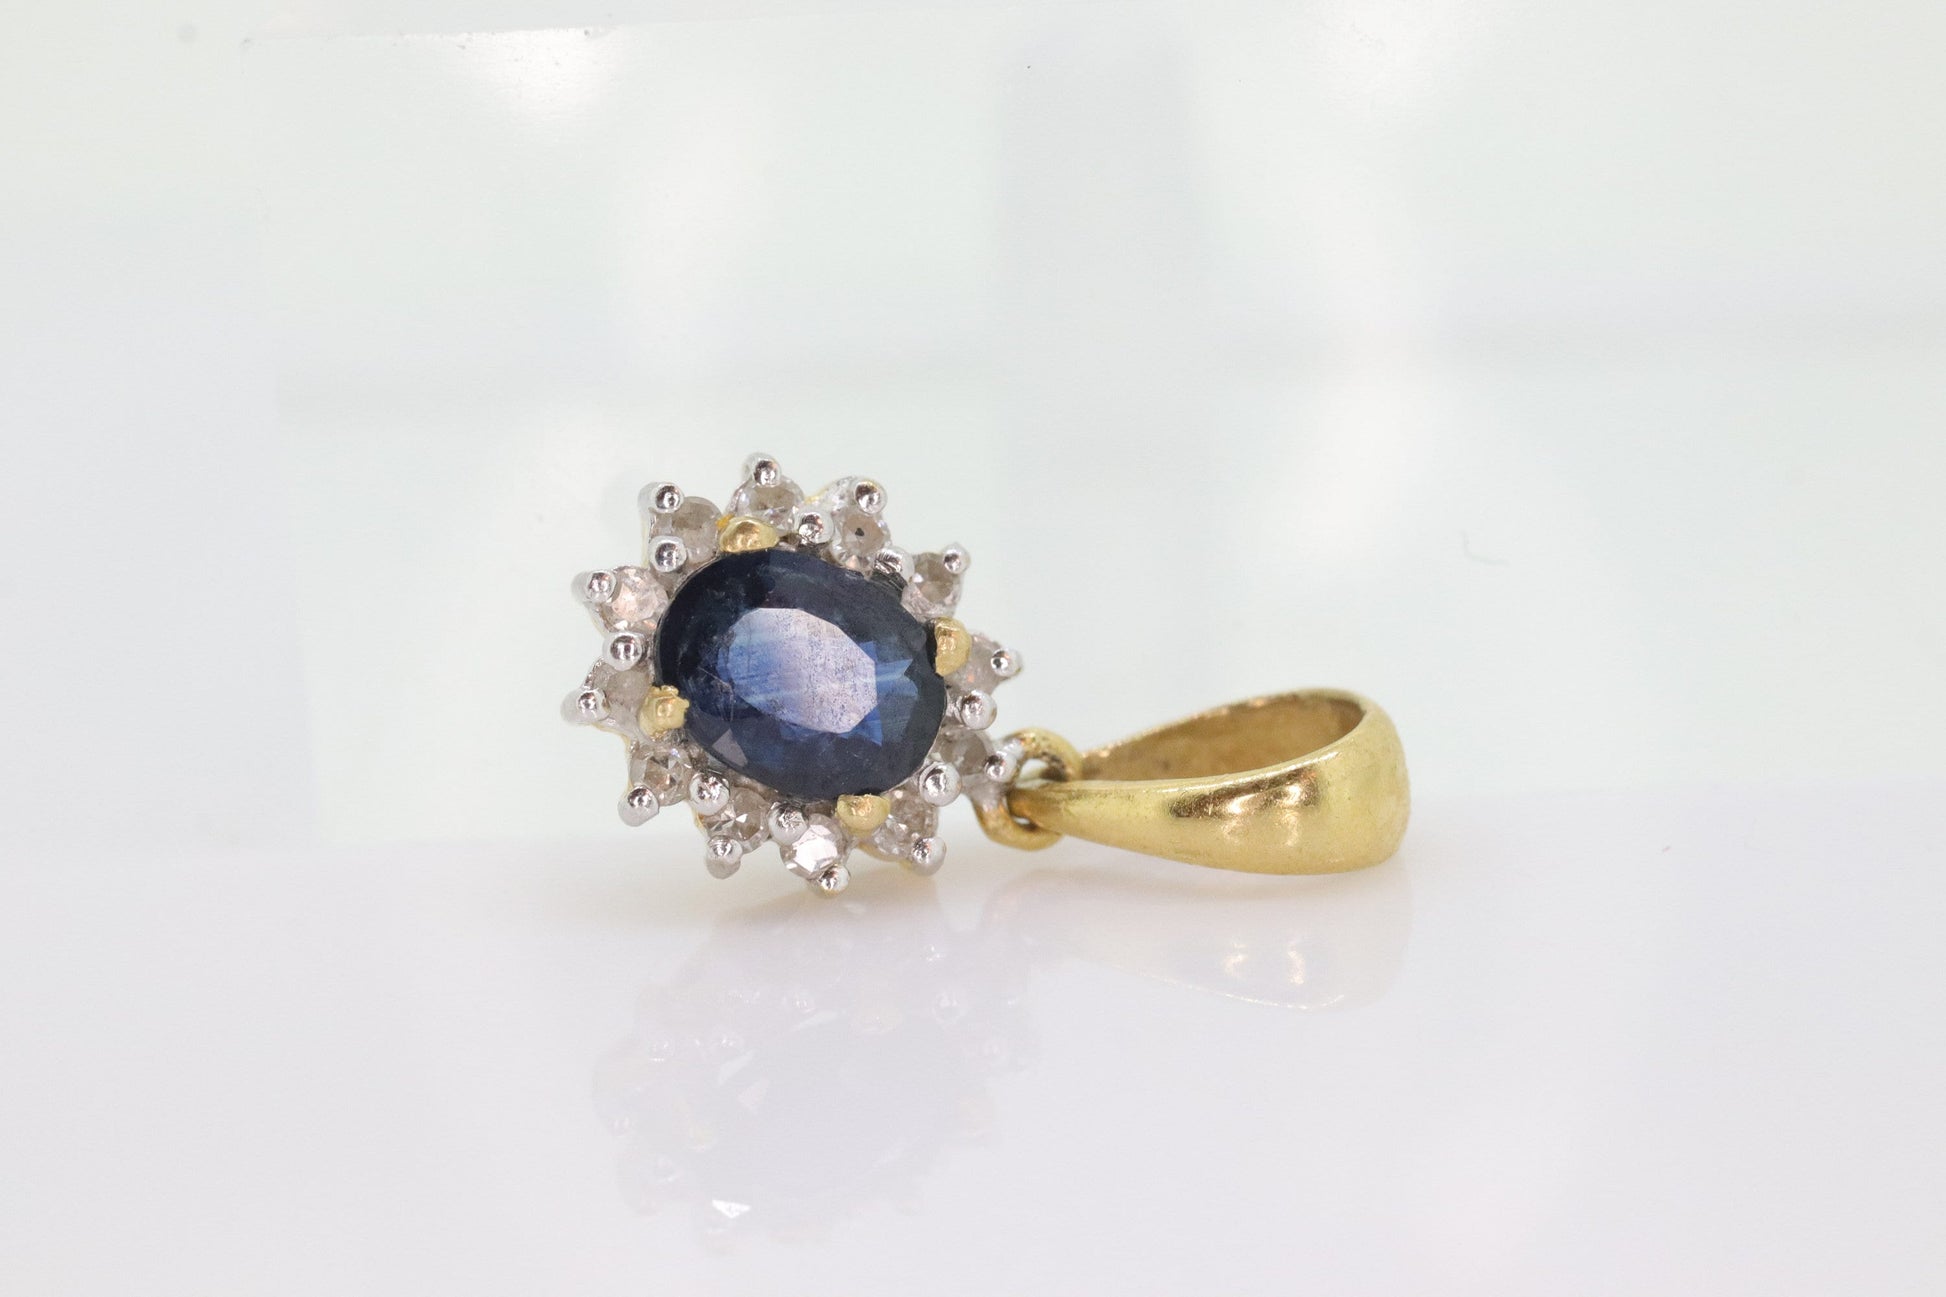 Blue Genuine Sapphire and diamond halo pendant. 14k precious dainty oval sapphire pendant. st(28)